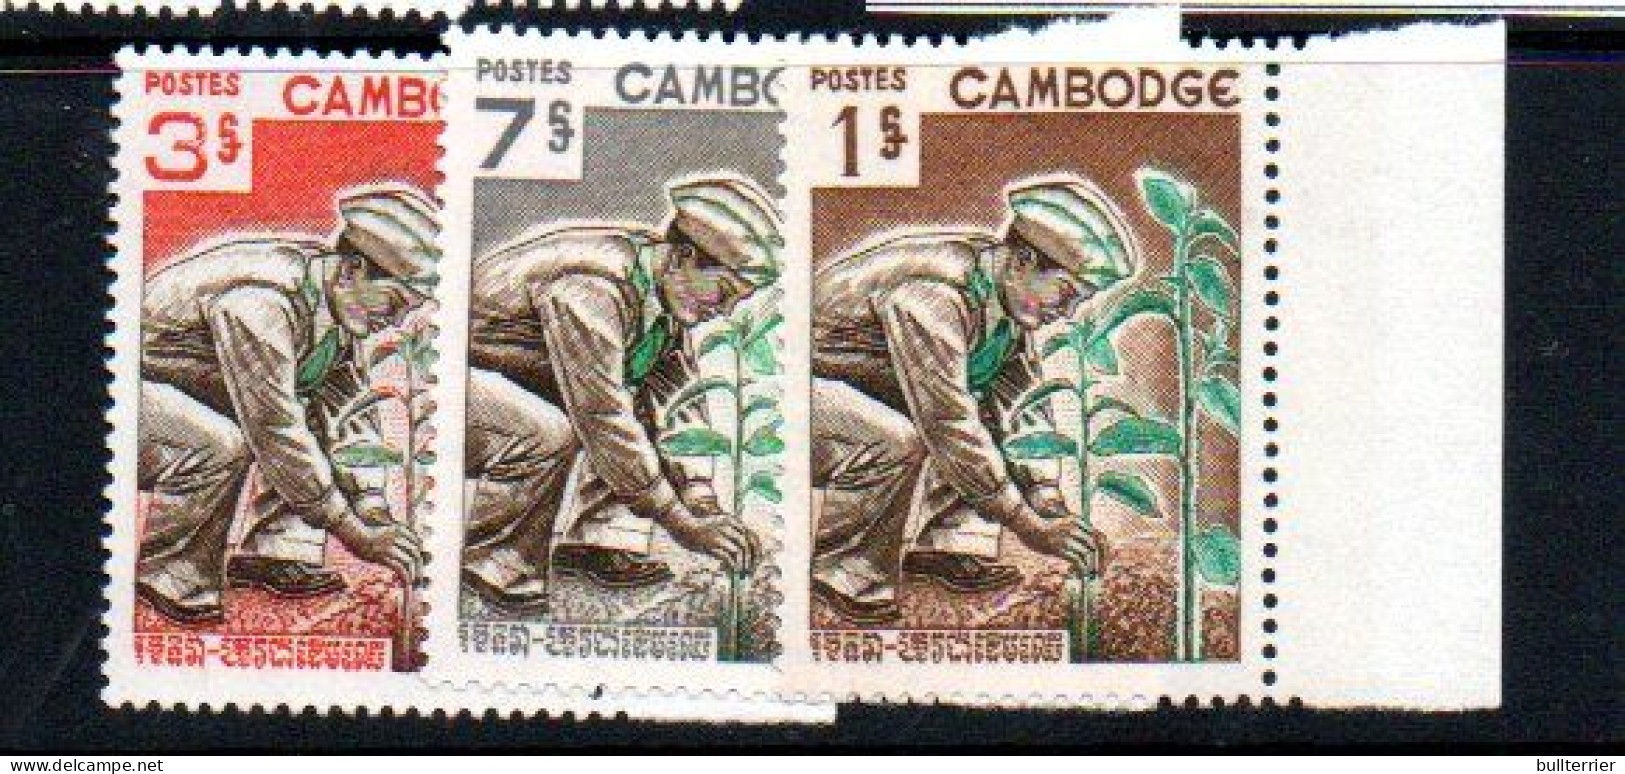 CAMBODIA -  1966  - TREE DAY SET OF 3 MINT NEVER HINGED - Cambodge